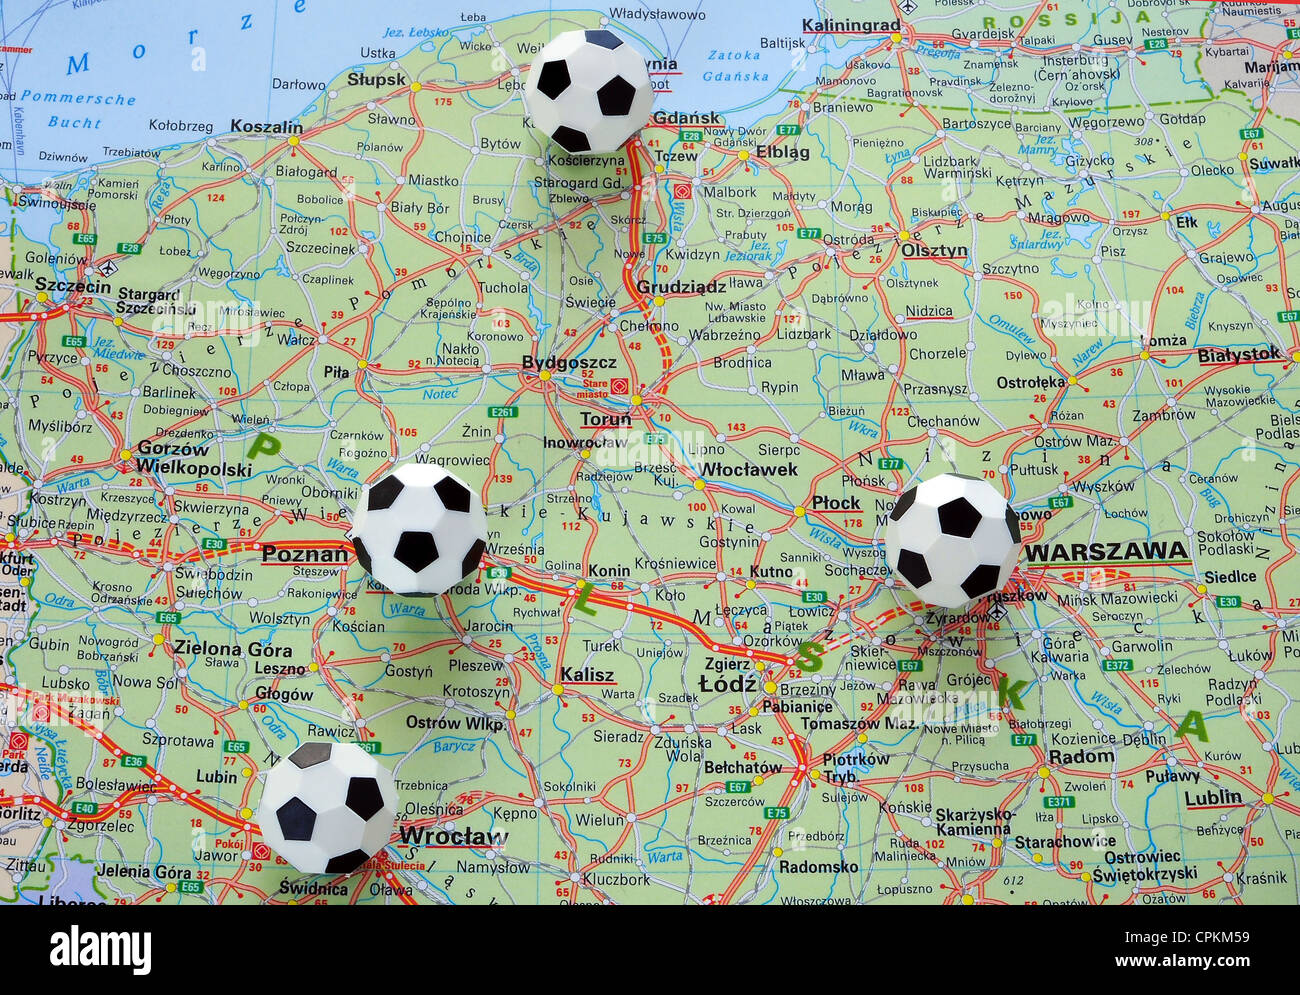 Polish city hosts the soccer, football tournament 2012 Stock Photo